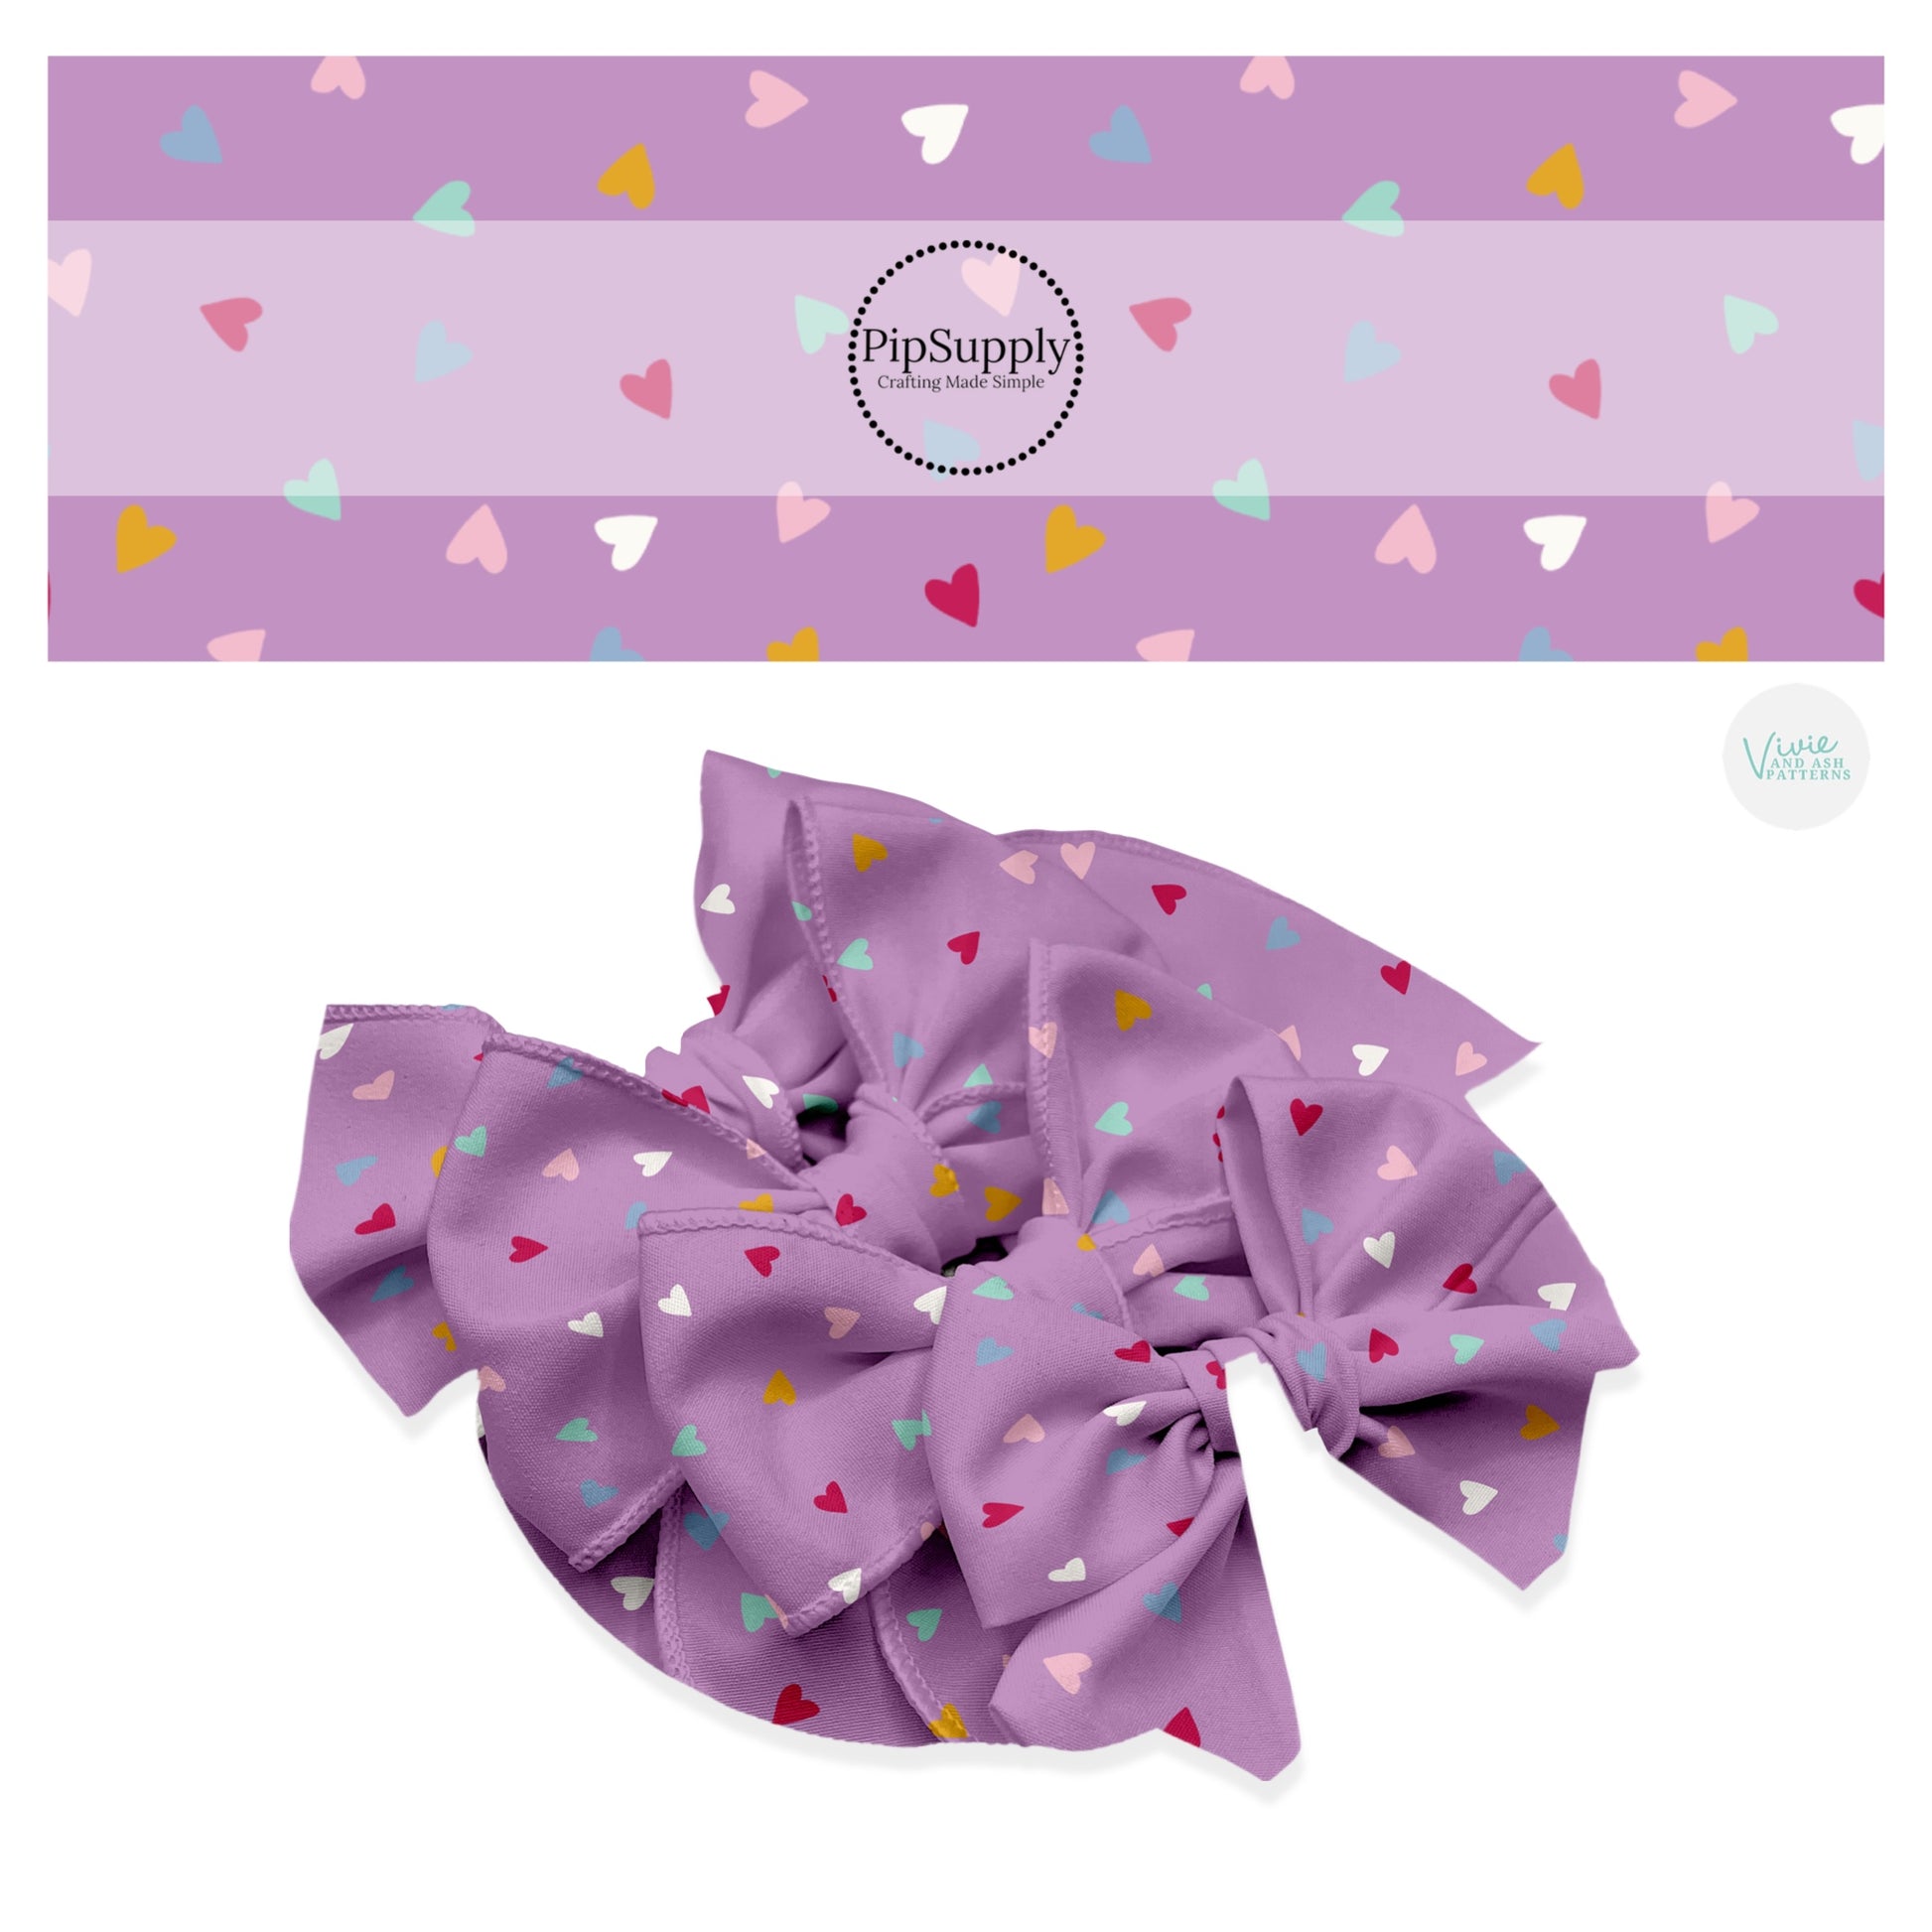 Little rainbow hearts on purple hair bow strips